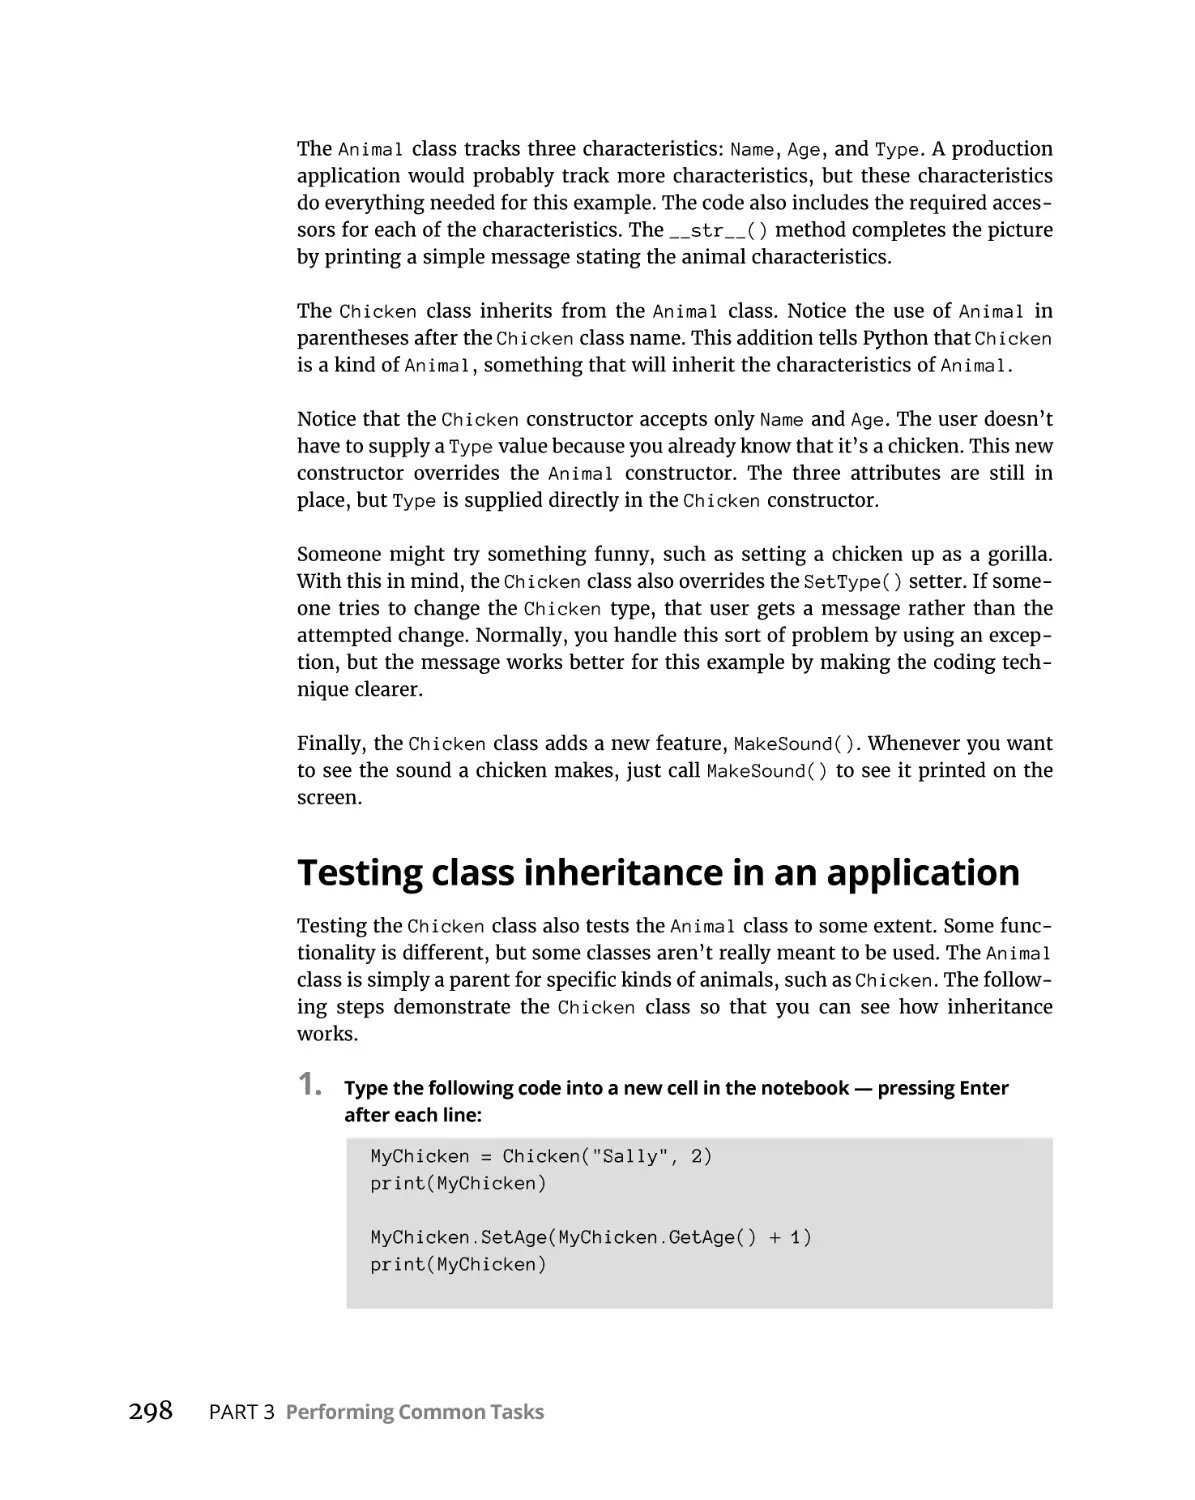 Testing class inheritance in an application